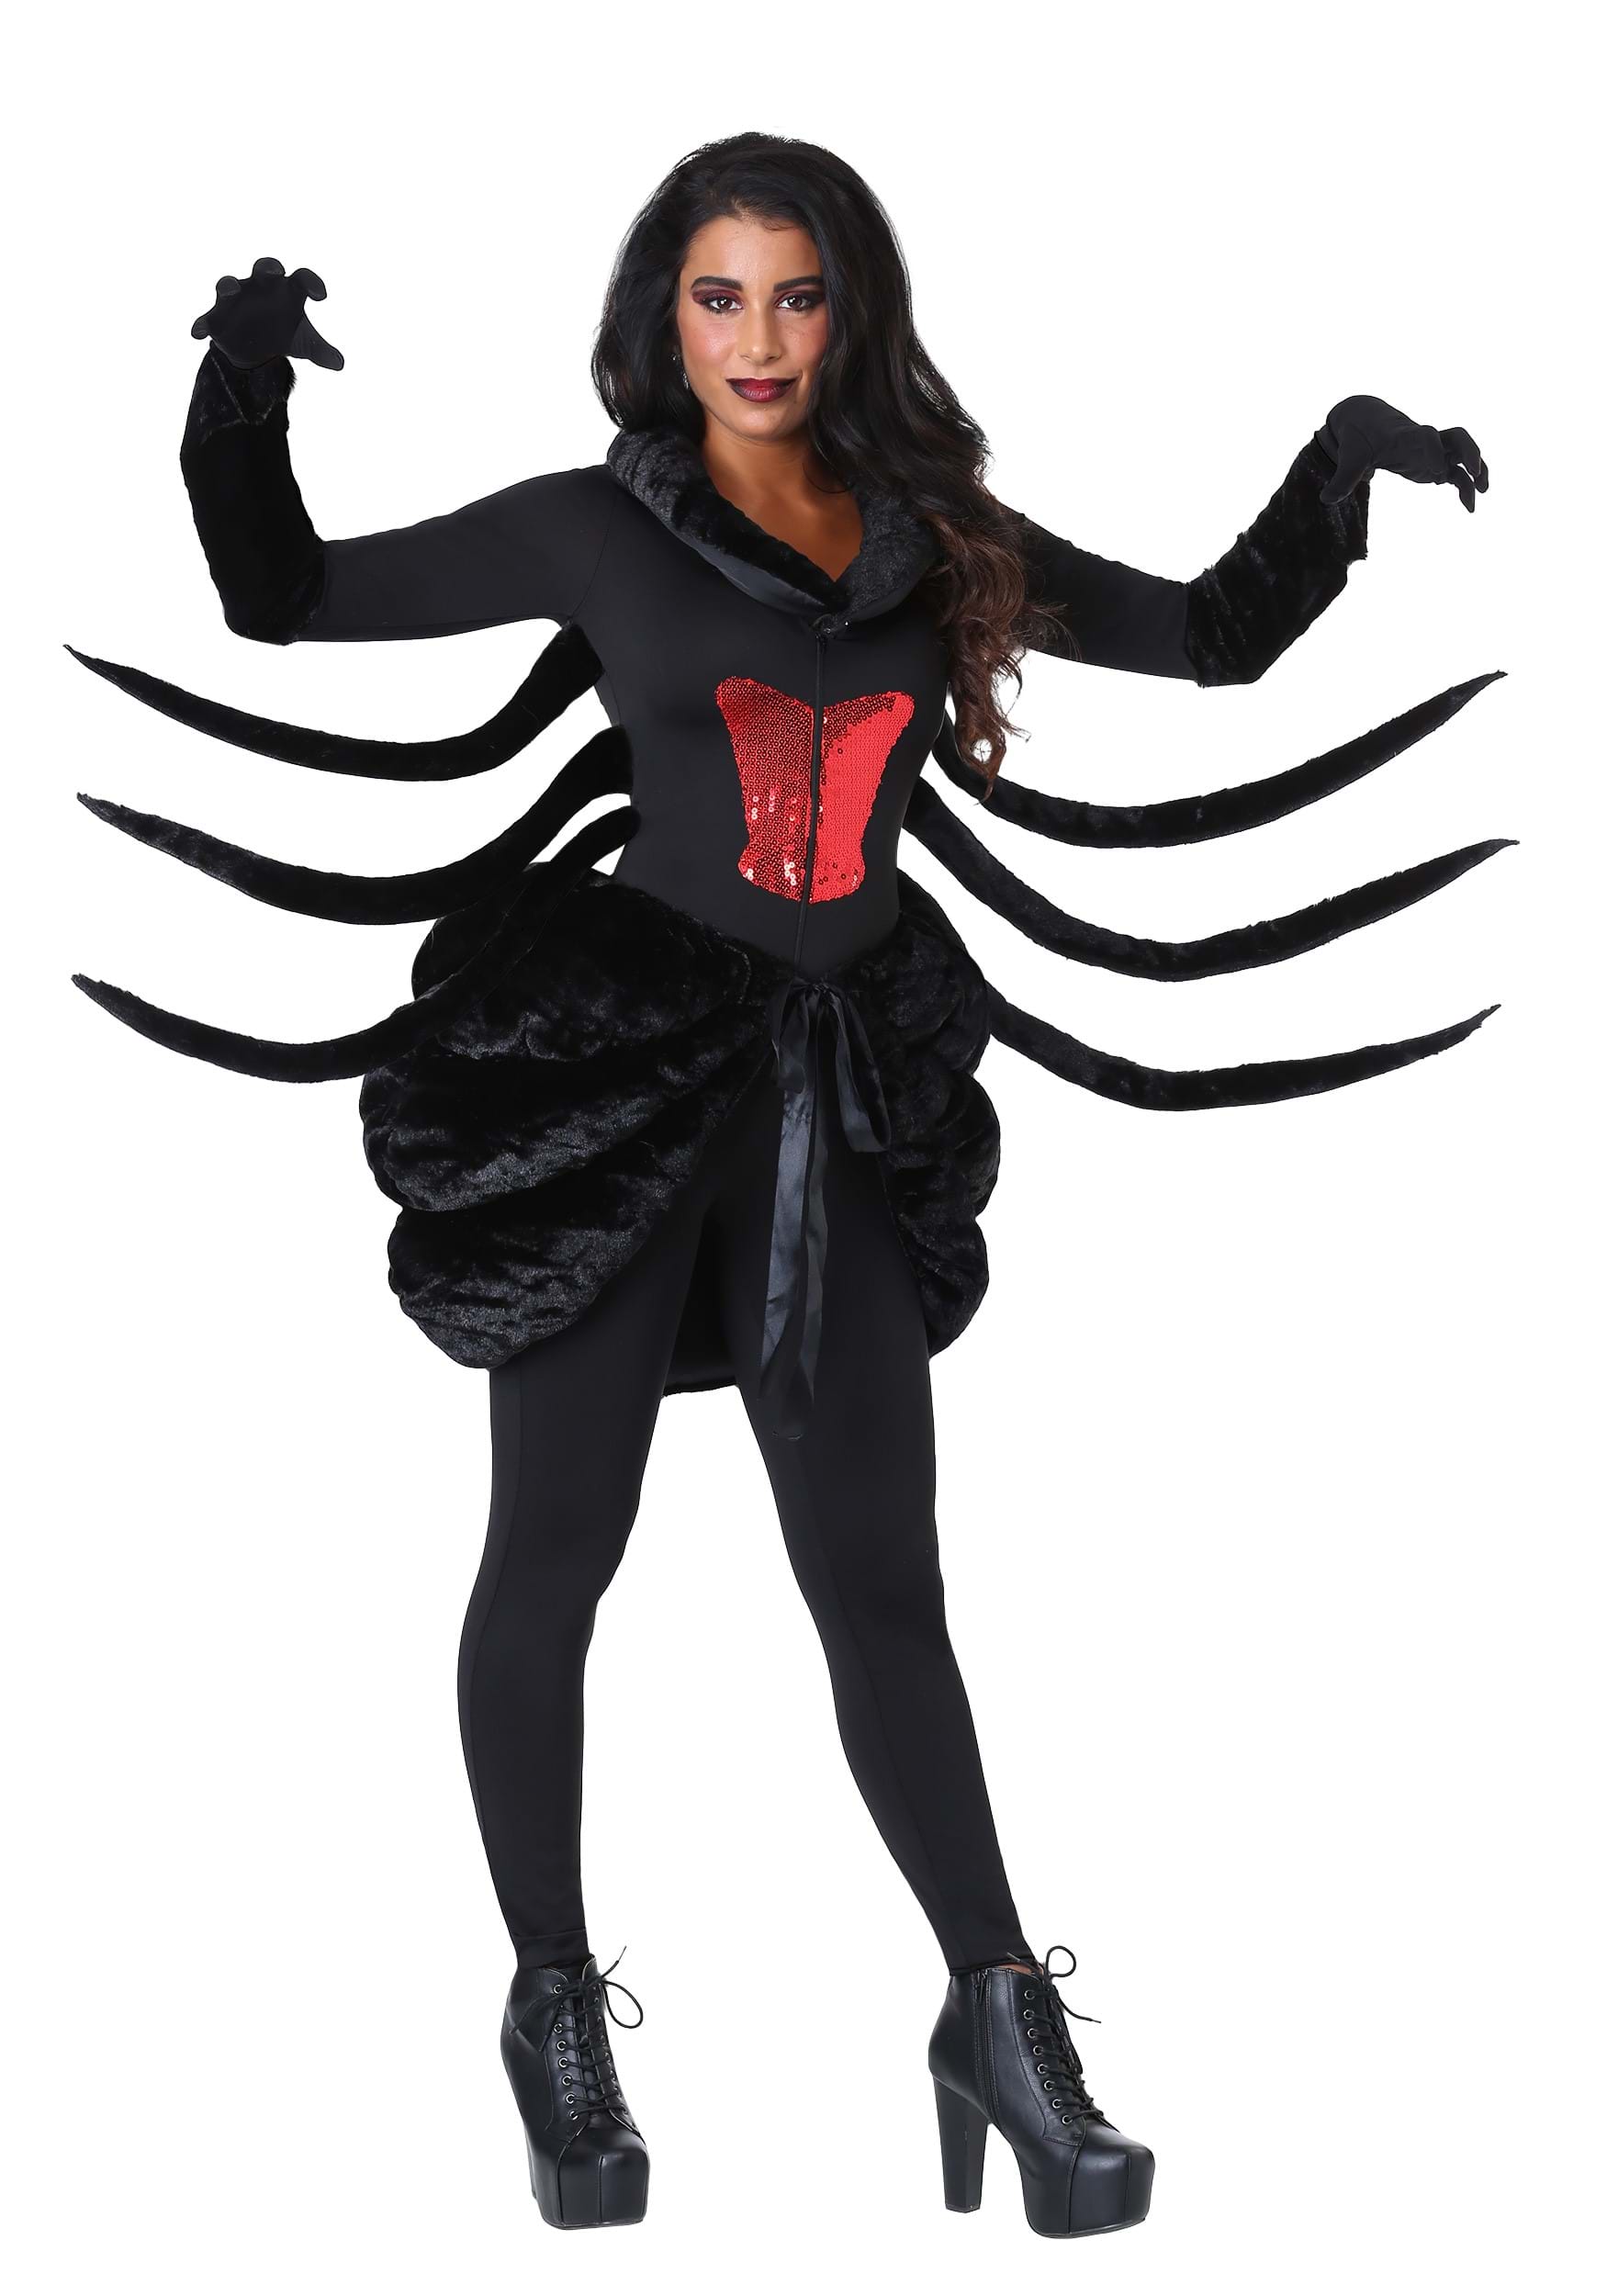 index finger Rustic Pollinator Black Widow Spider Costume for Women